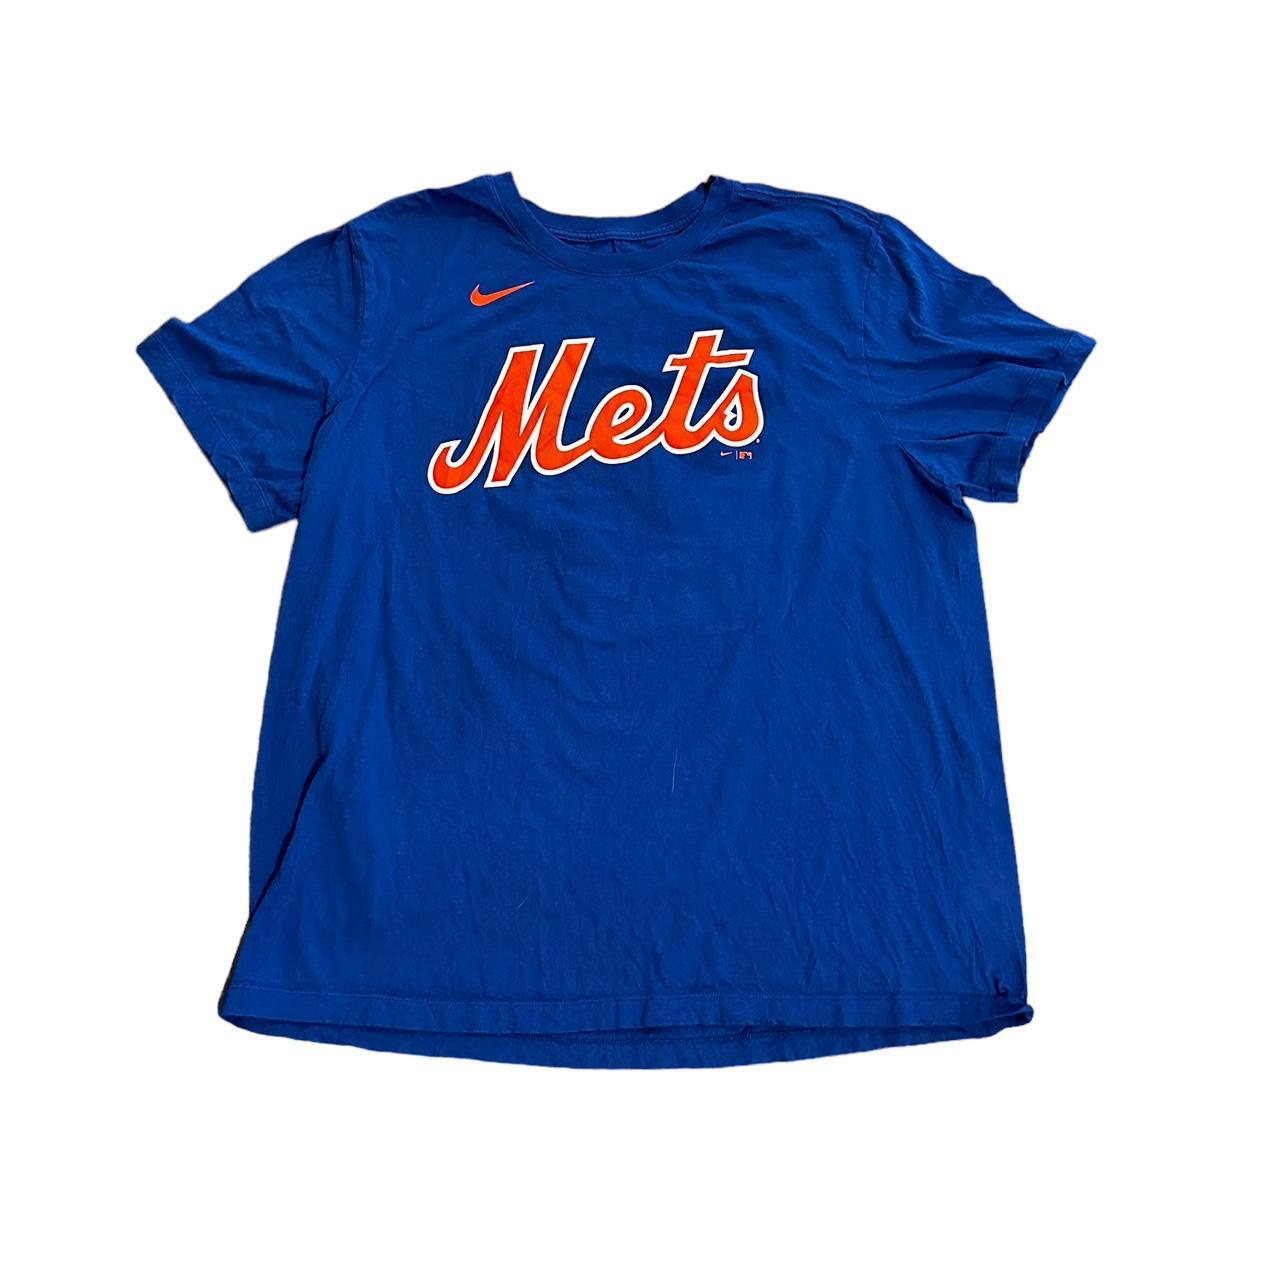 Max Scherzer New York Mets Jersey Signature Pin